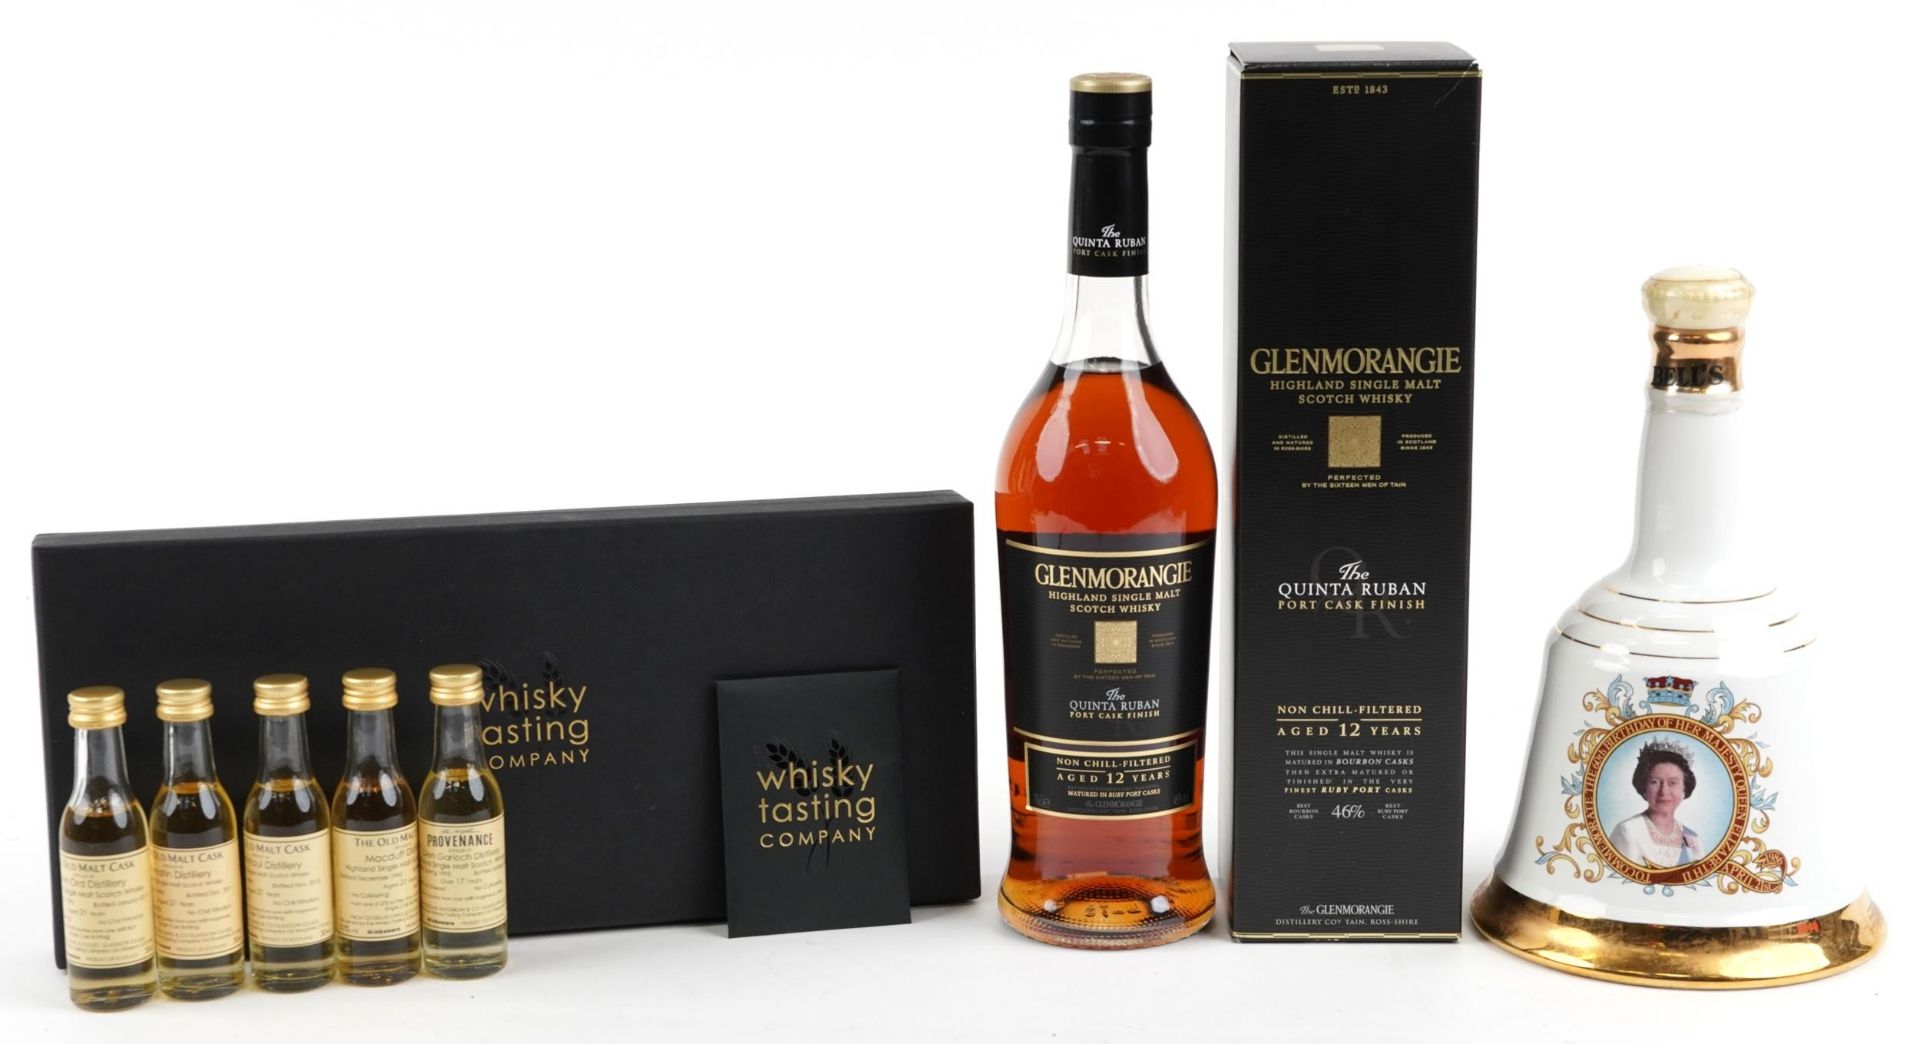 Whisky comprising a bottle of Glenmorangie Single Malt Quinta Ruban Port Cask Finished Aged 12